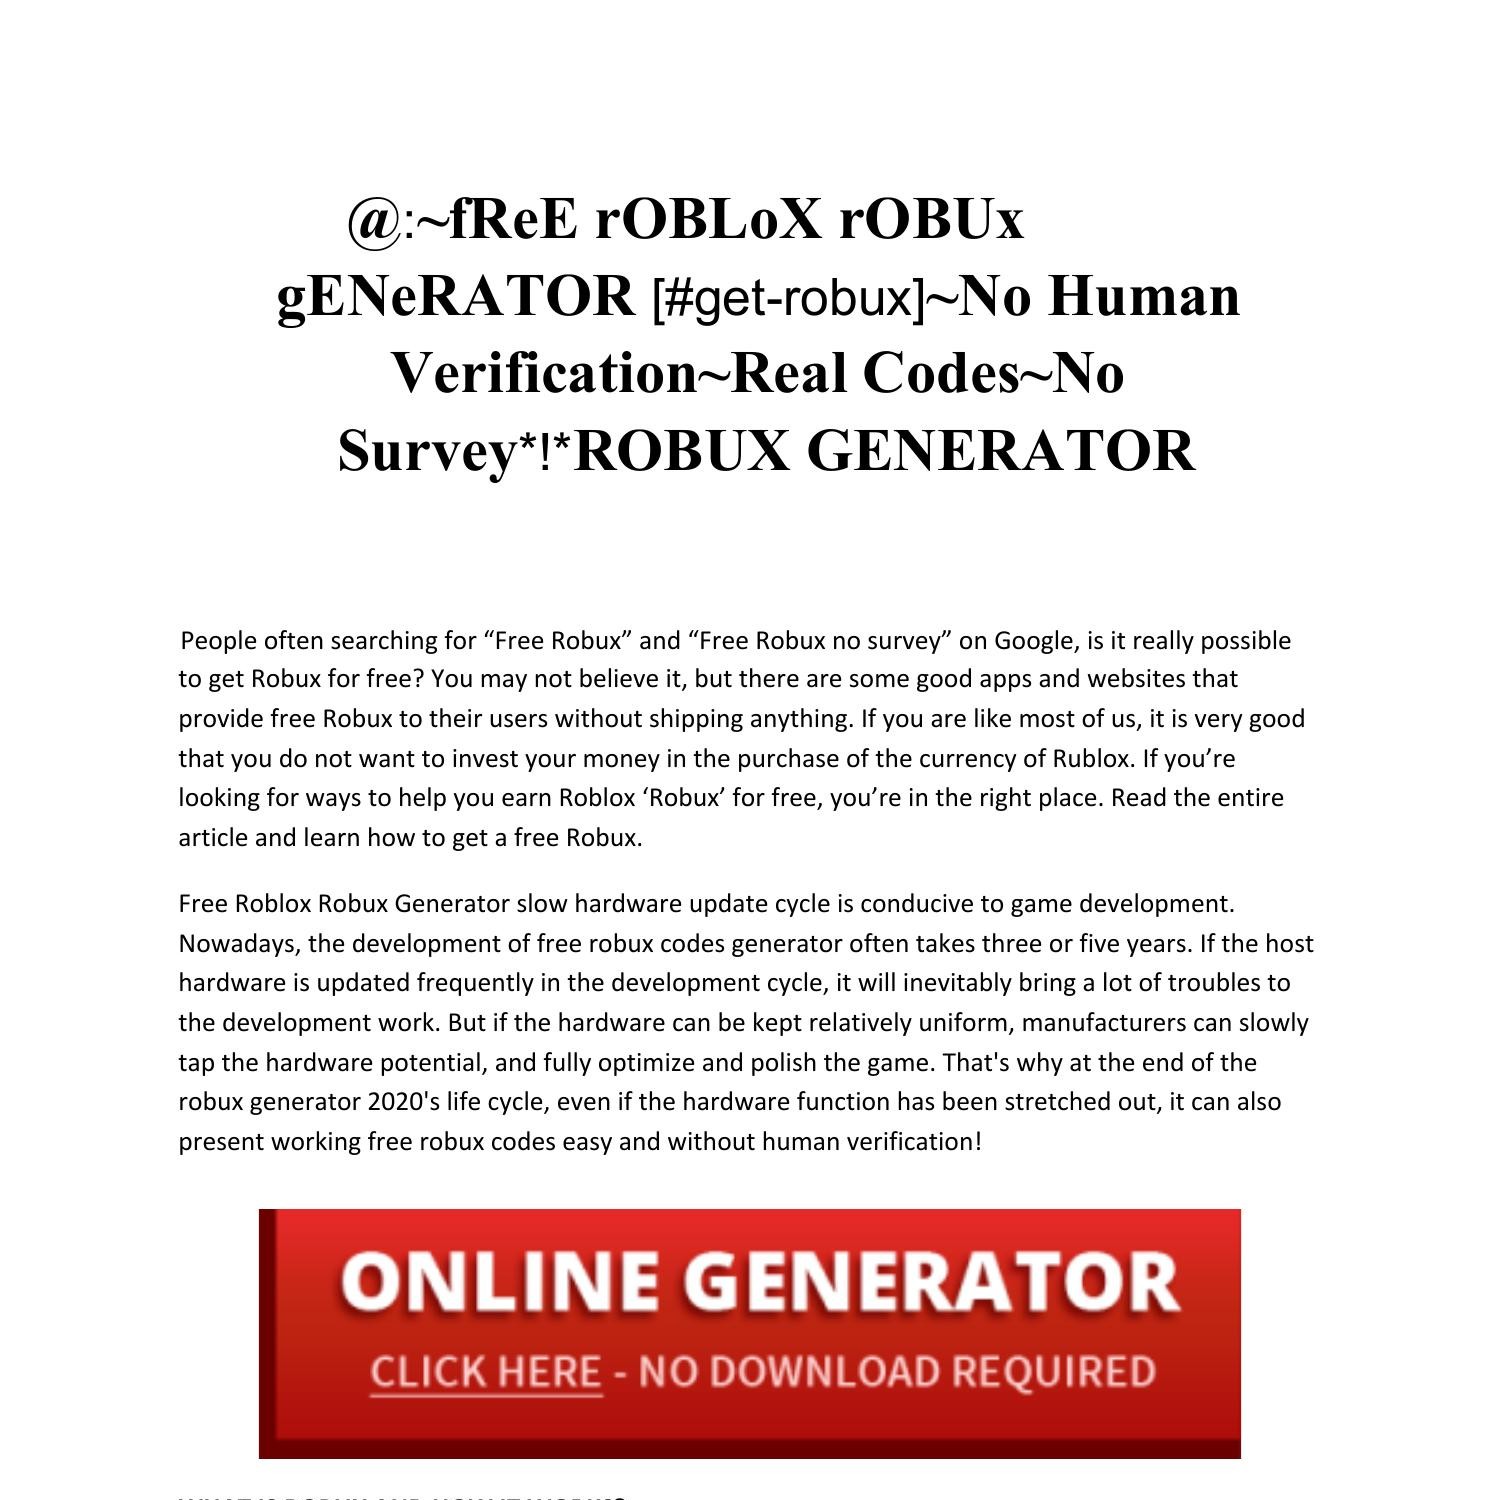 robux generator